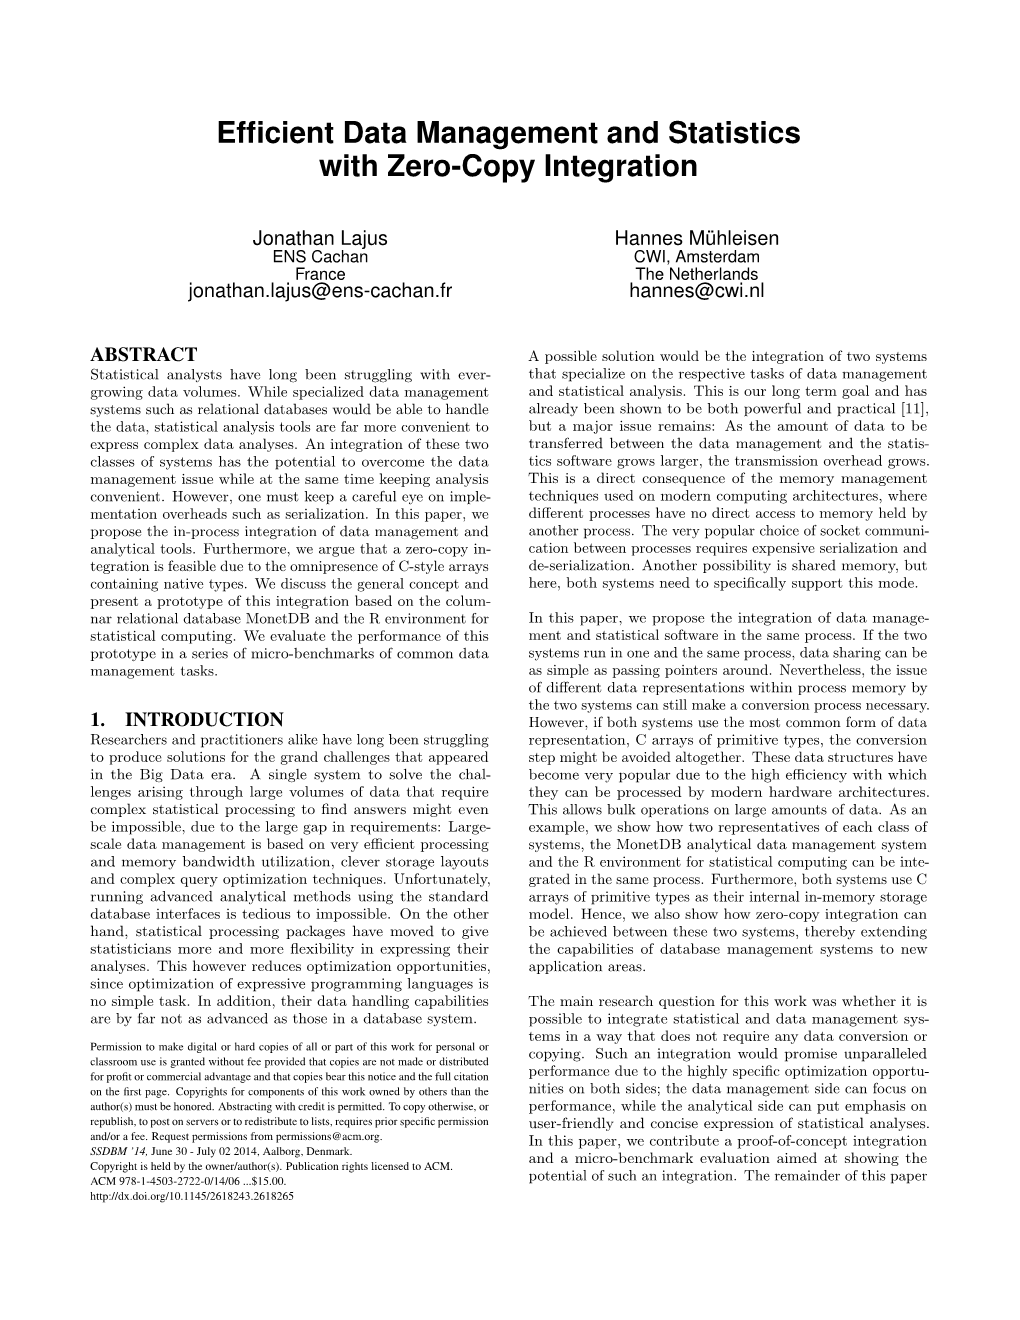 Efficient Data Management and Statistics with Zero-Copy Integration